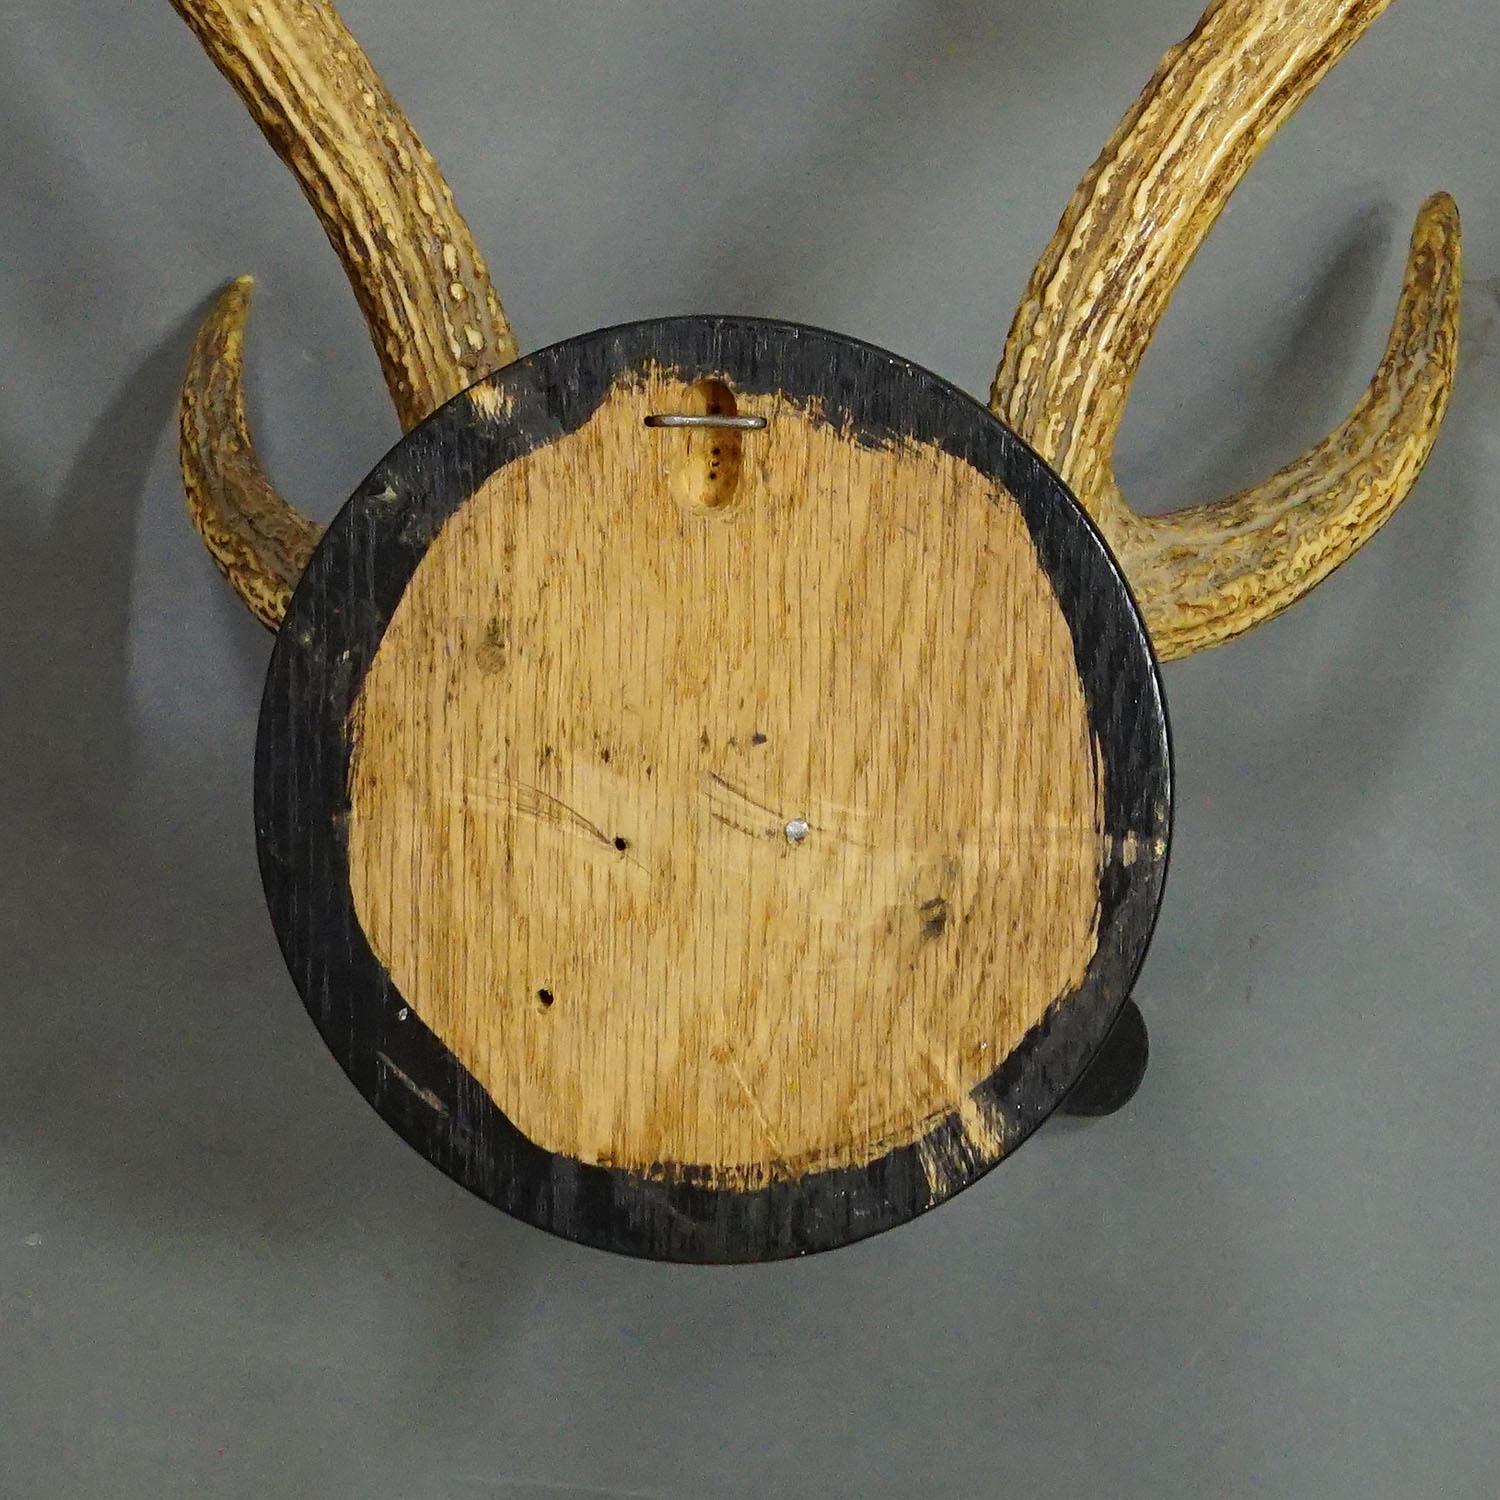 Antique Black Forest 6 Pointer Sika Deer Trophy on Wooden Plaque ca. 1900s For Sale 1